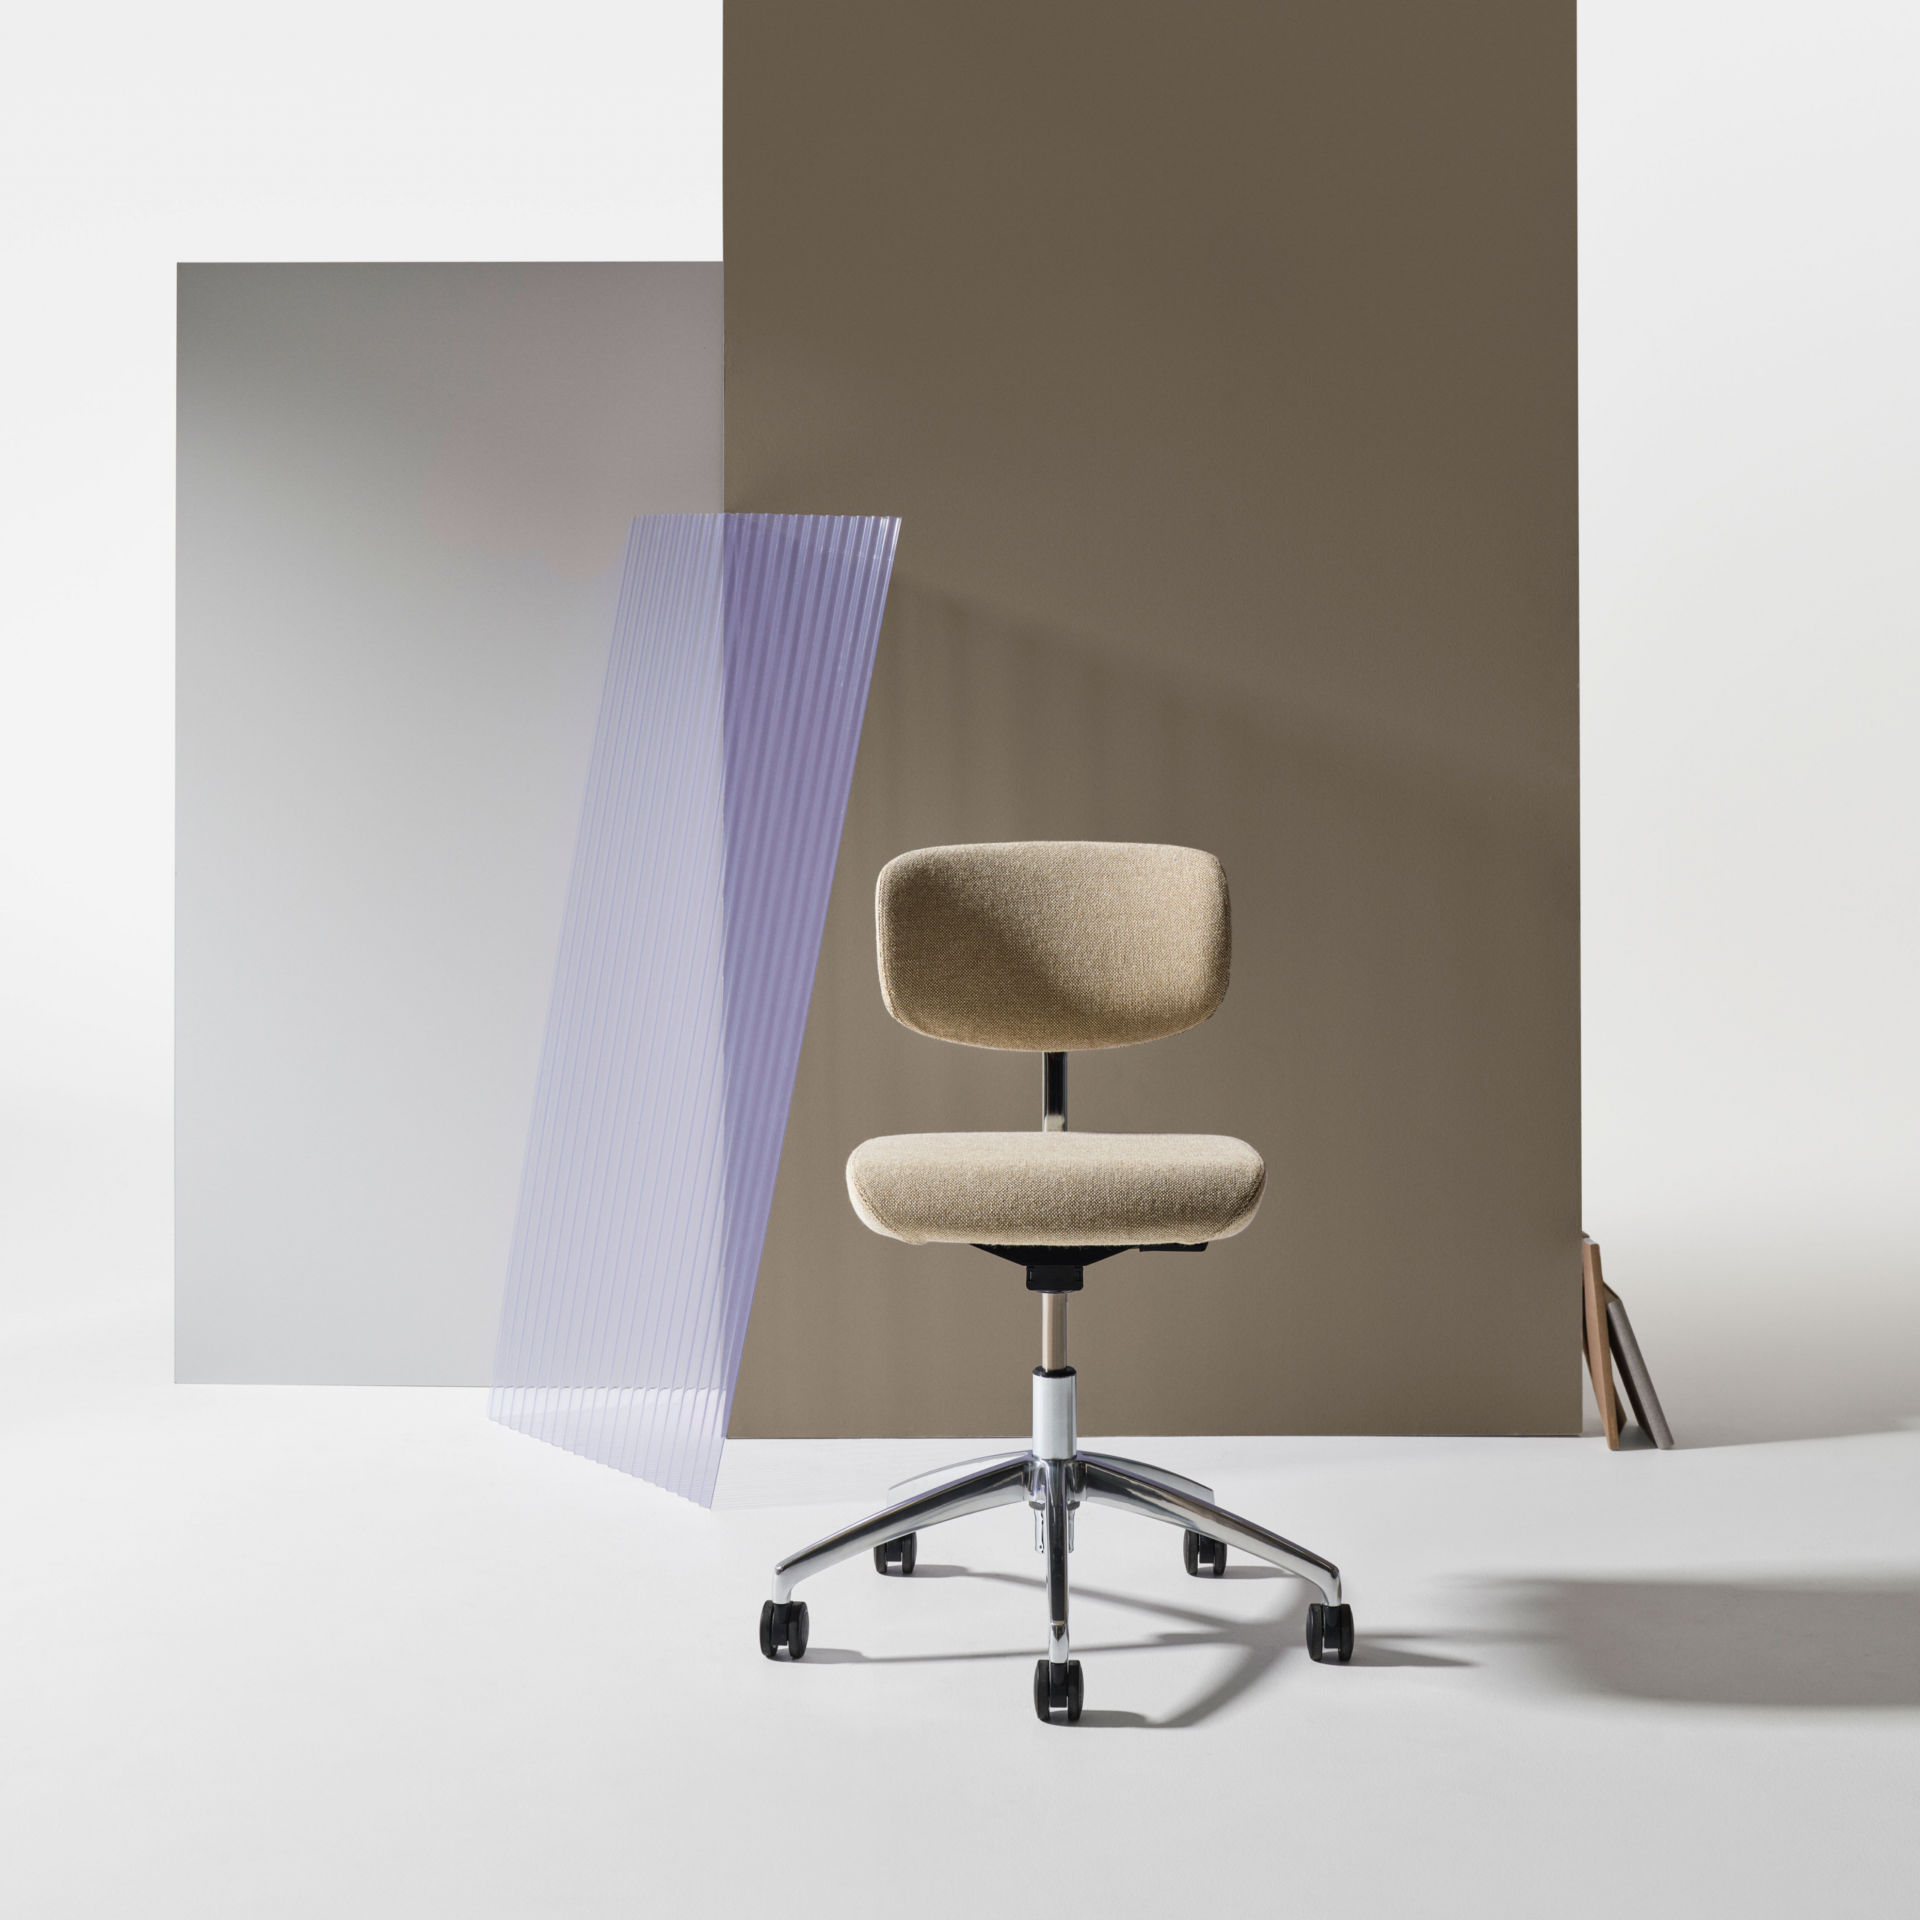 Savo Studio Studio workchair product image 2